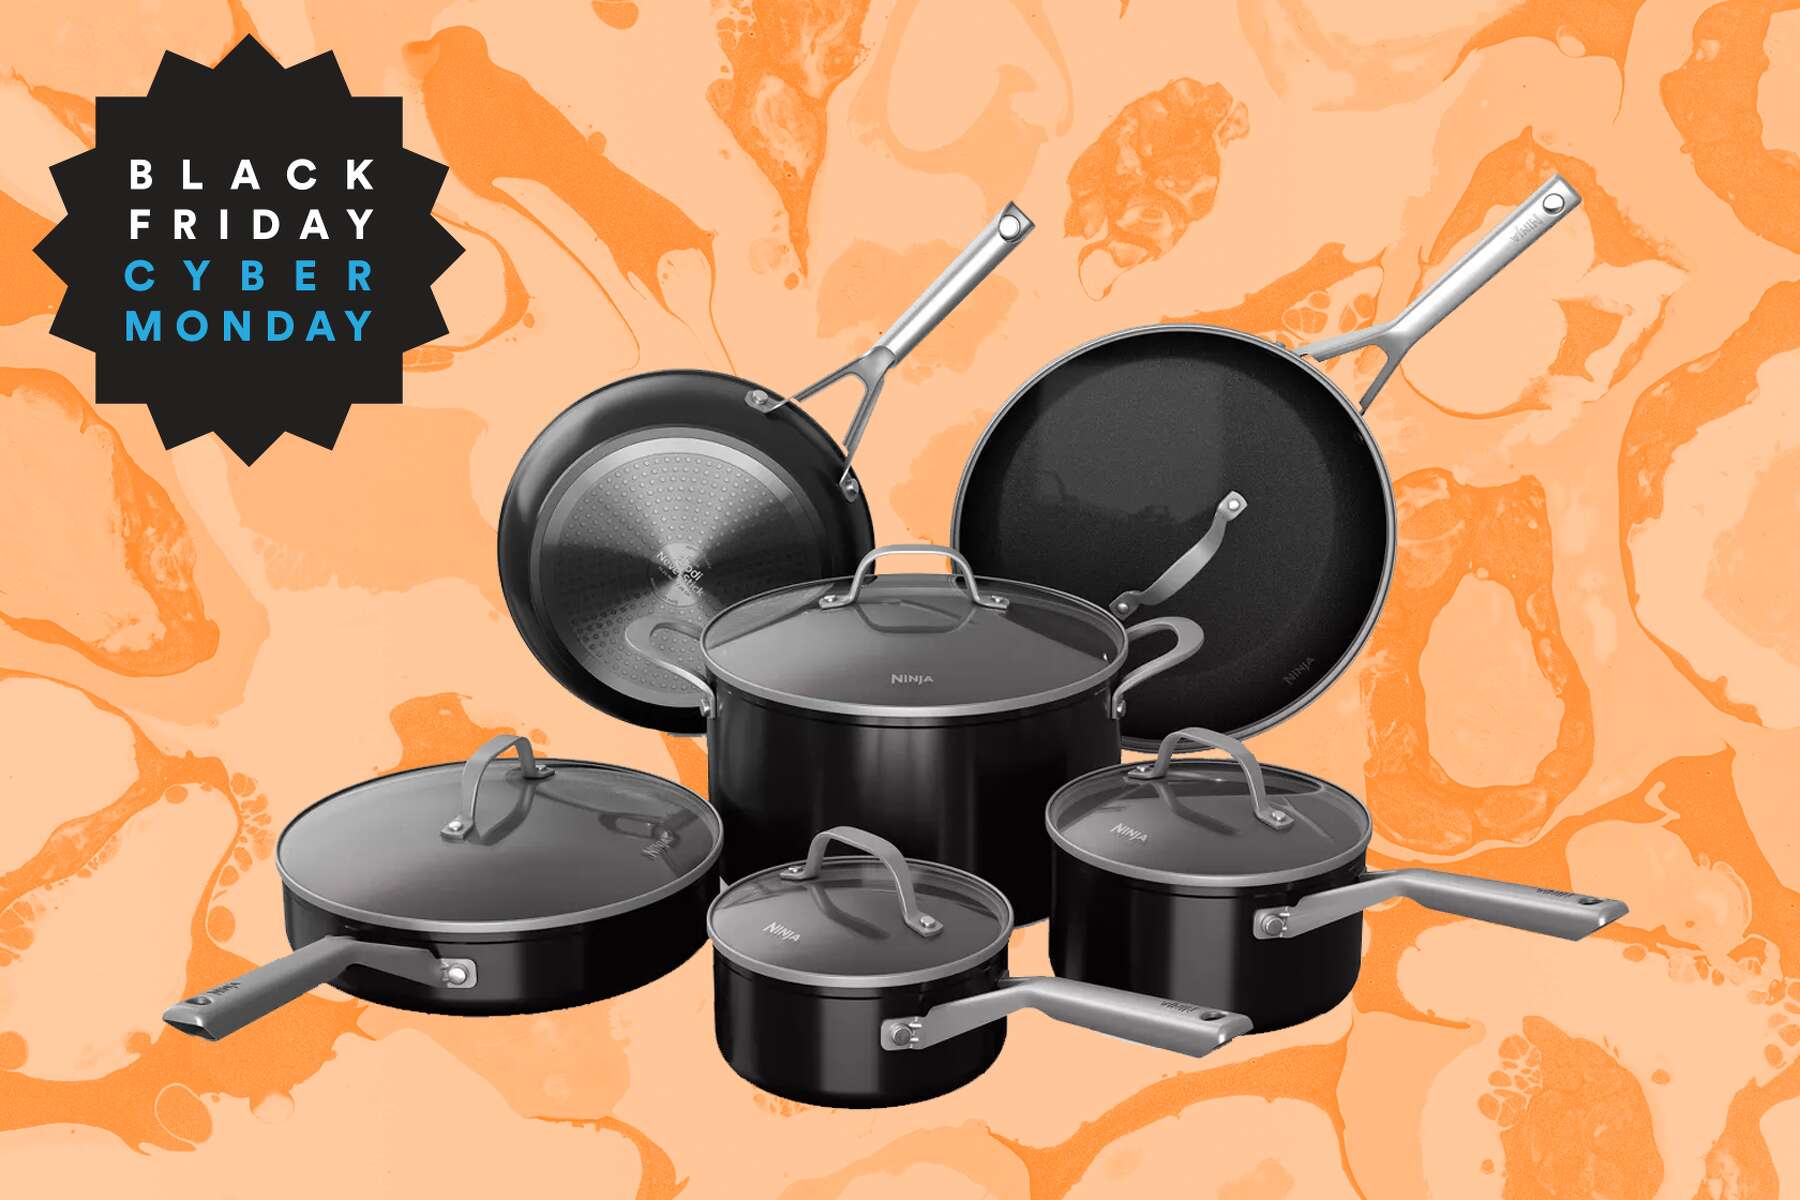 Target has a Ninja Foodi non-stick cookware set for $169.99